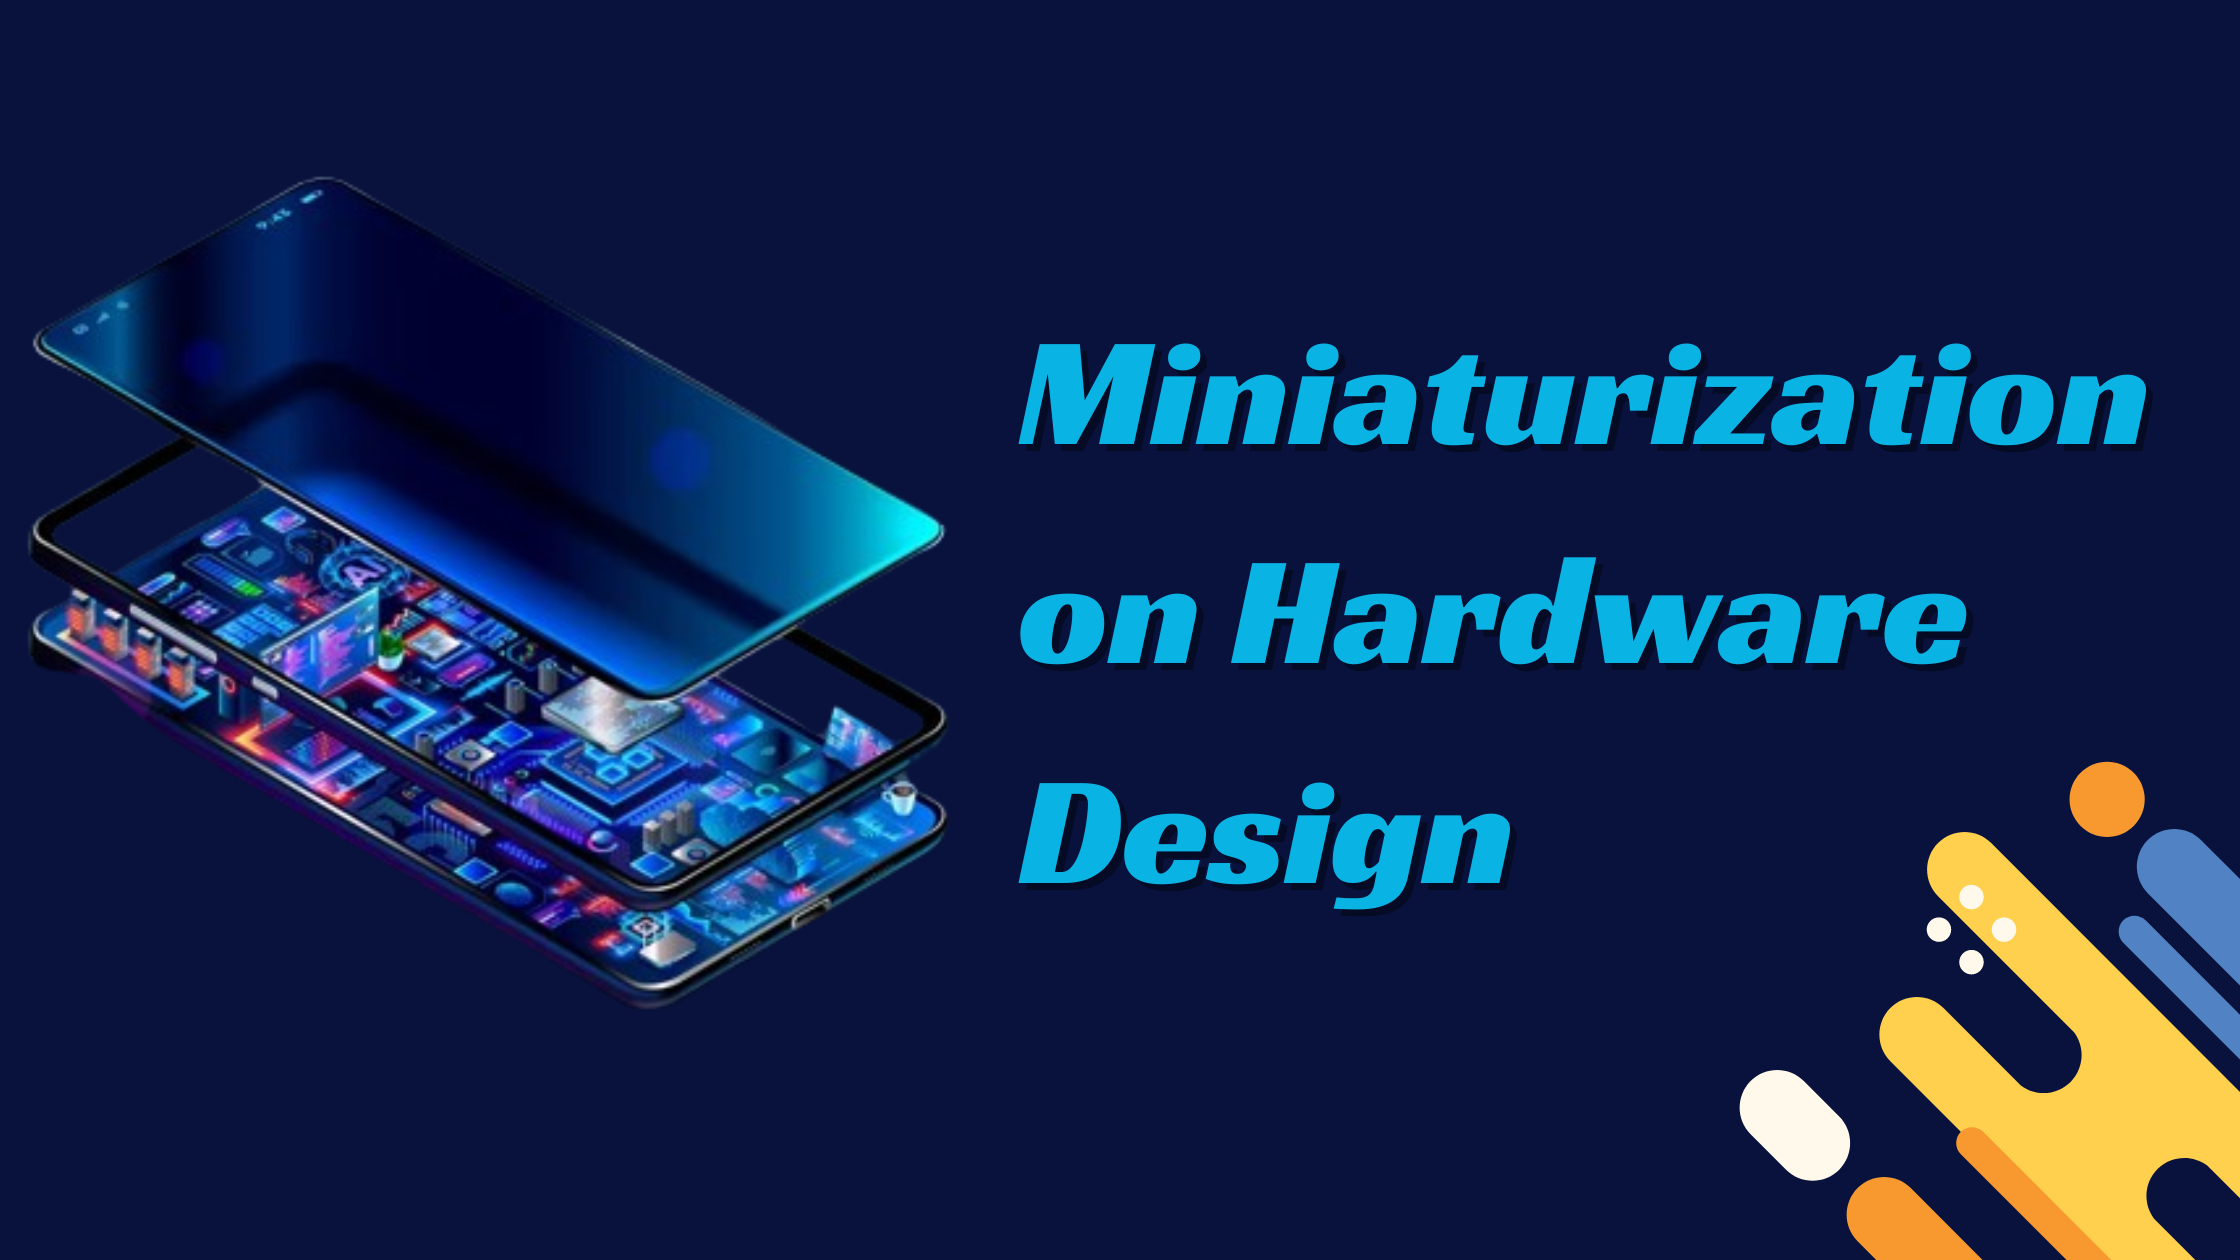 The Impact of Miniaturization on Hardware Design